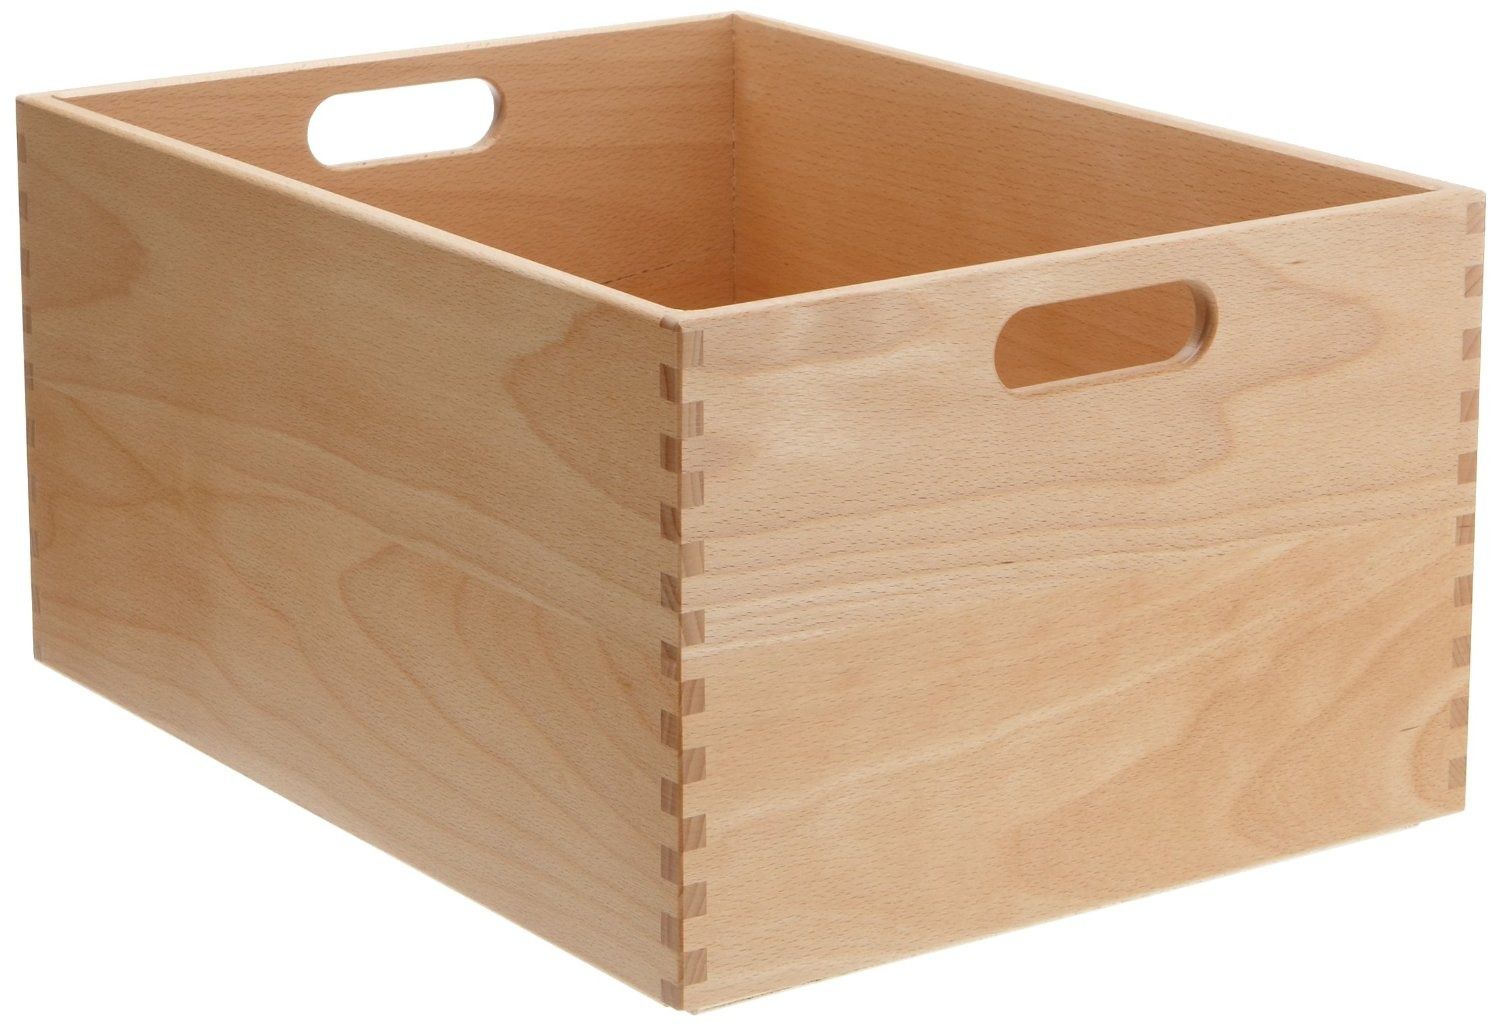 Dřevěná úložná krabička, 40 x 30 x 21 cm, ZELLER - EMAKO.CZ s.r.o.